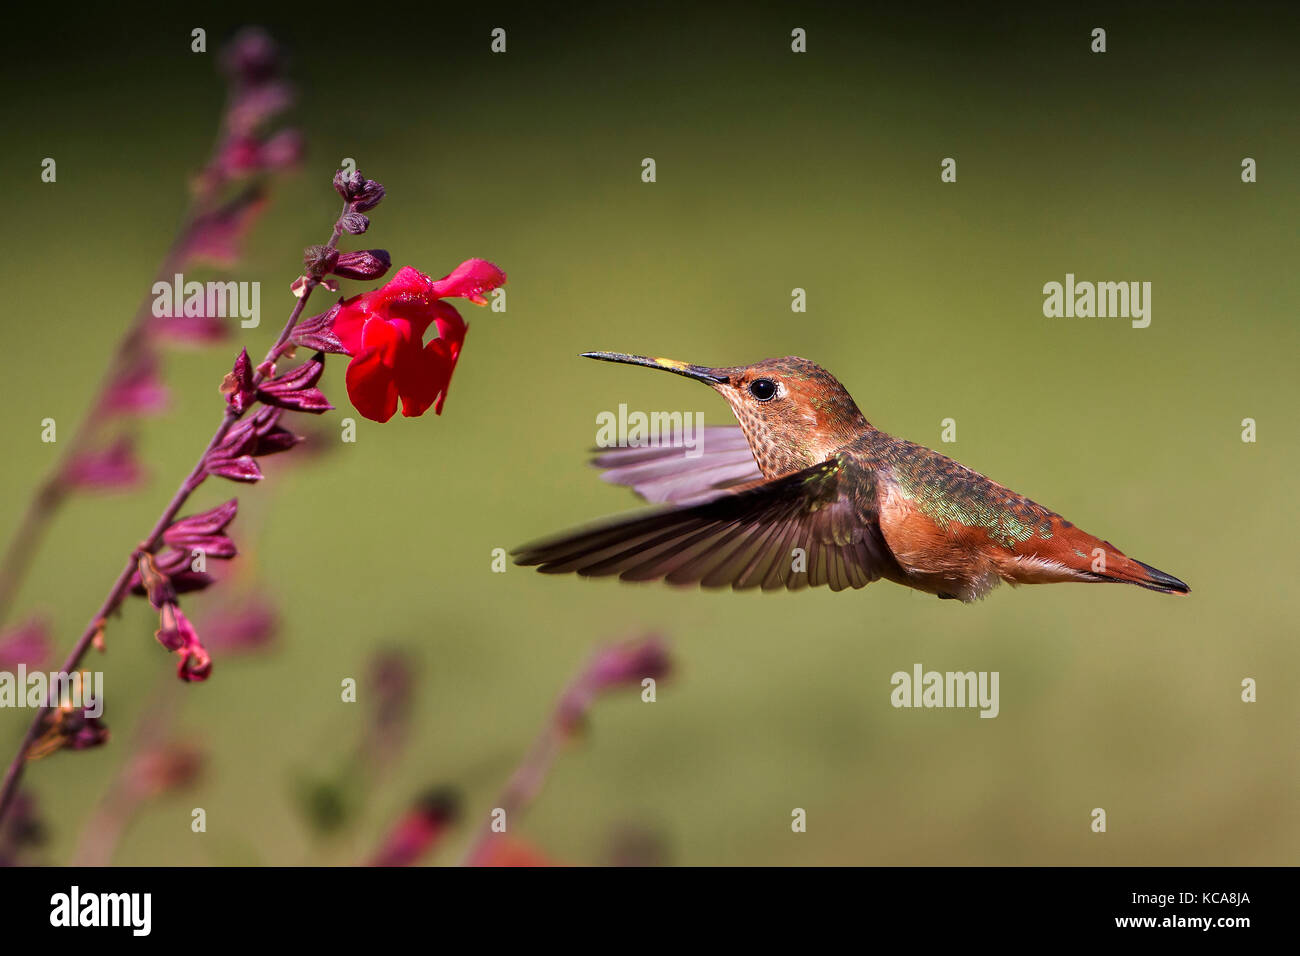 Allen's hummingbird feeding and pollinating flowers Stock Photo